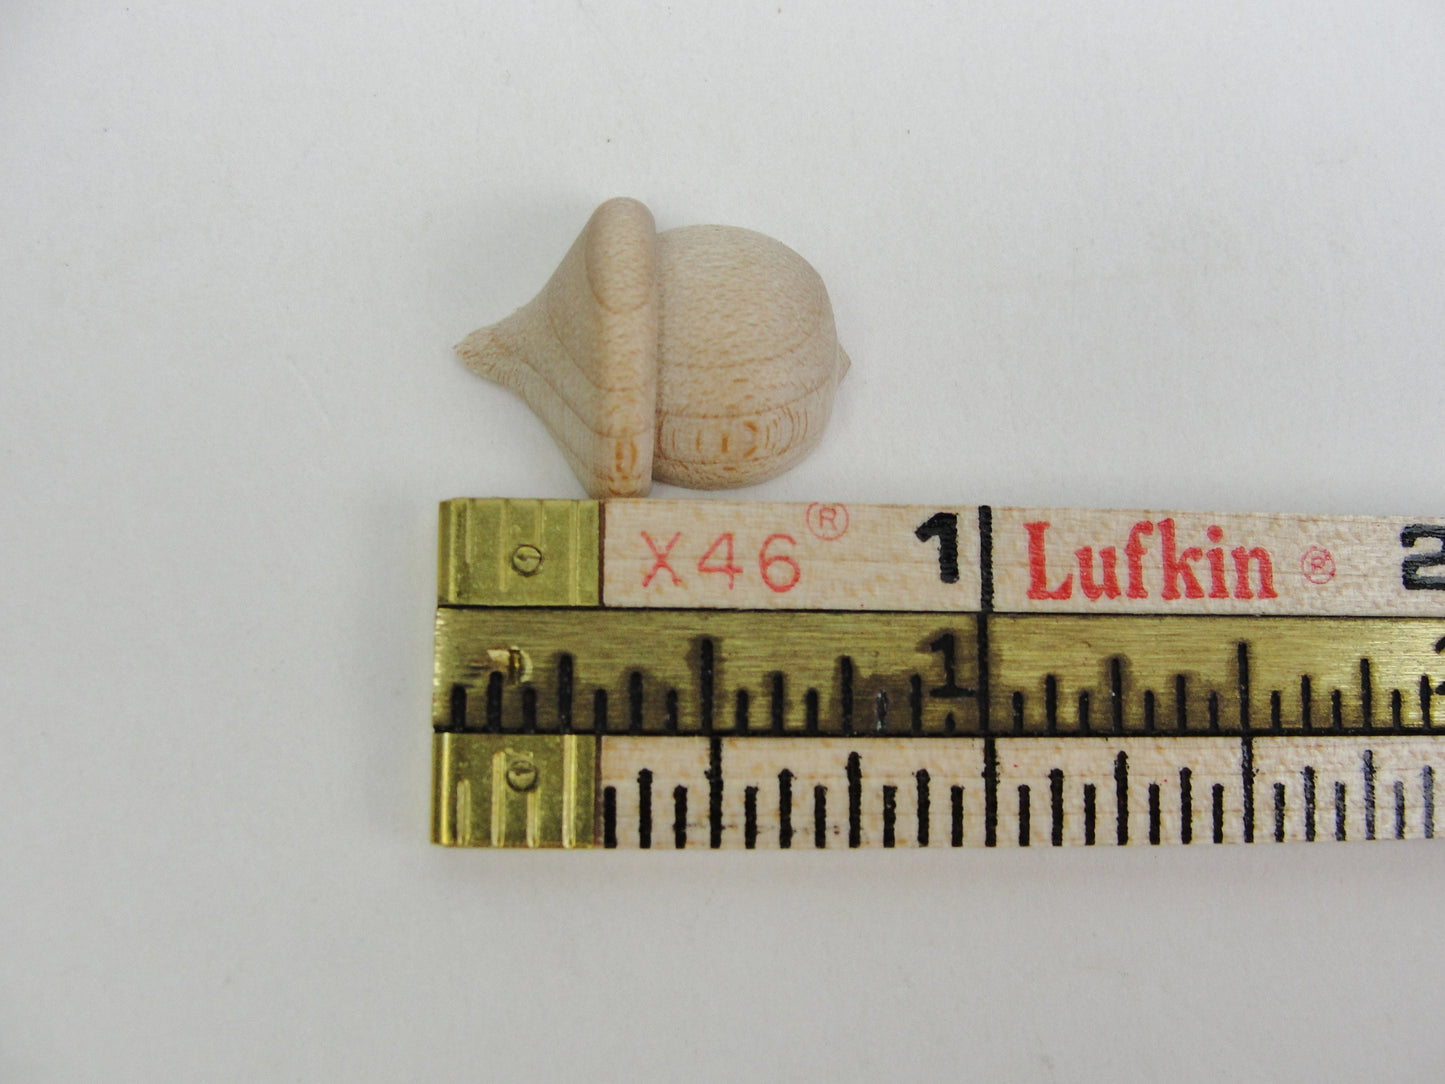 Miniature split wooden acorns, tiny acorns set of 10 Unfinished DIY